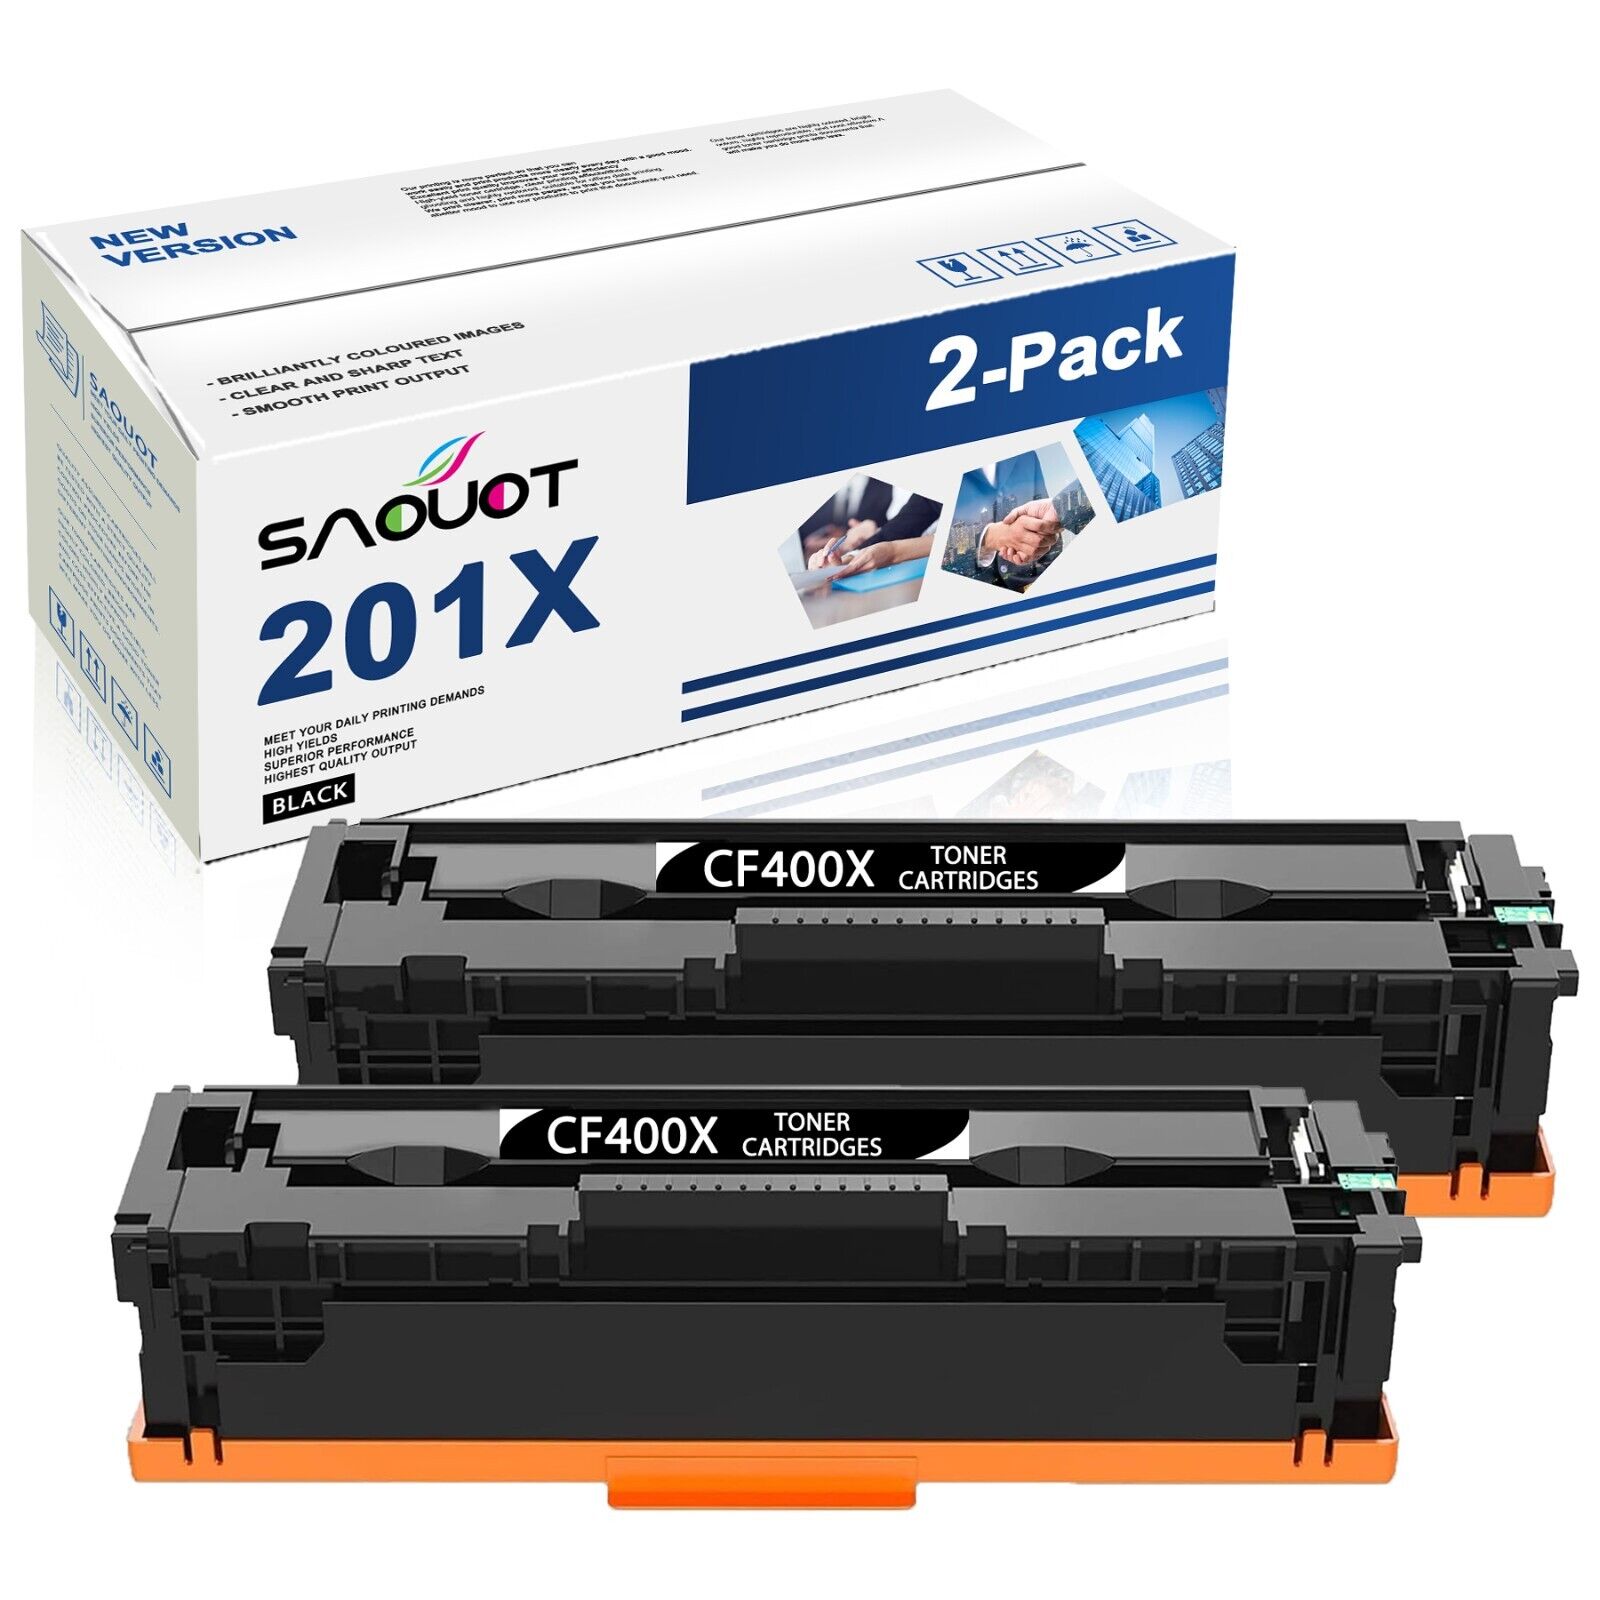 201X Black Toner Cartridge Replacement for HP NEW CF400X M252dw M252n, 2 Pack